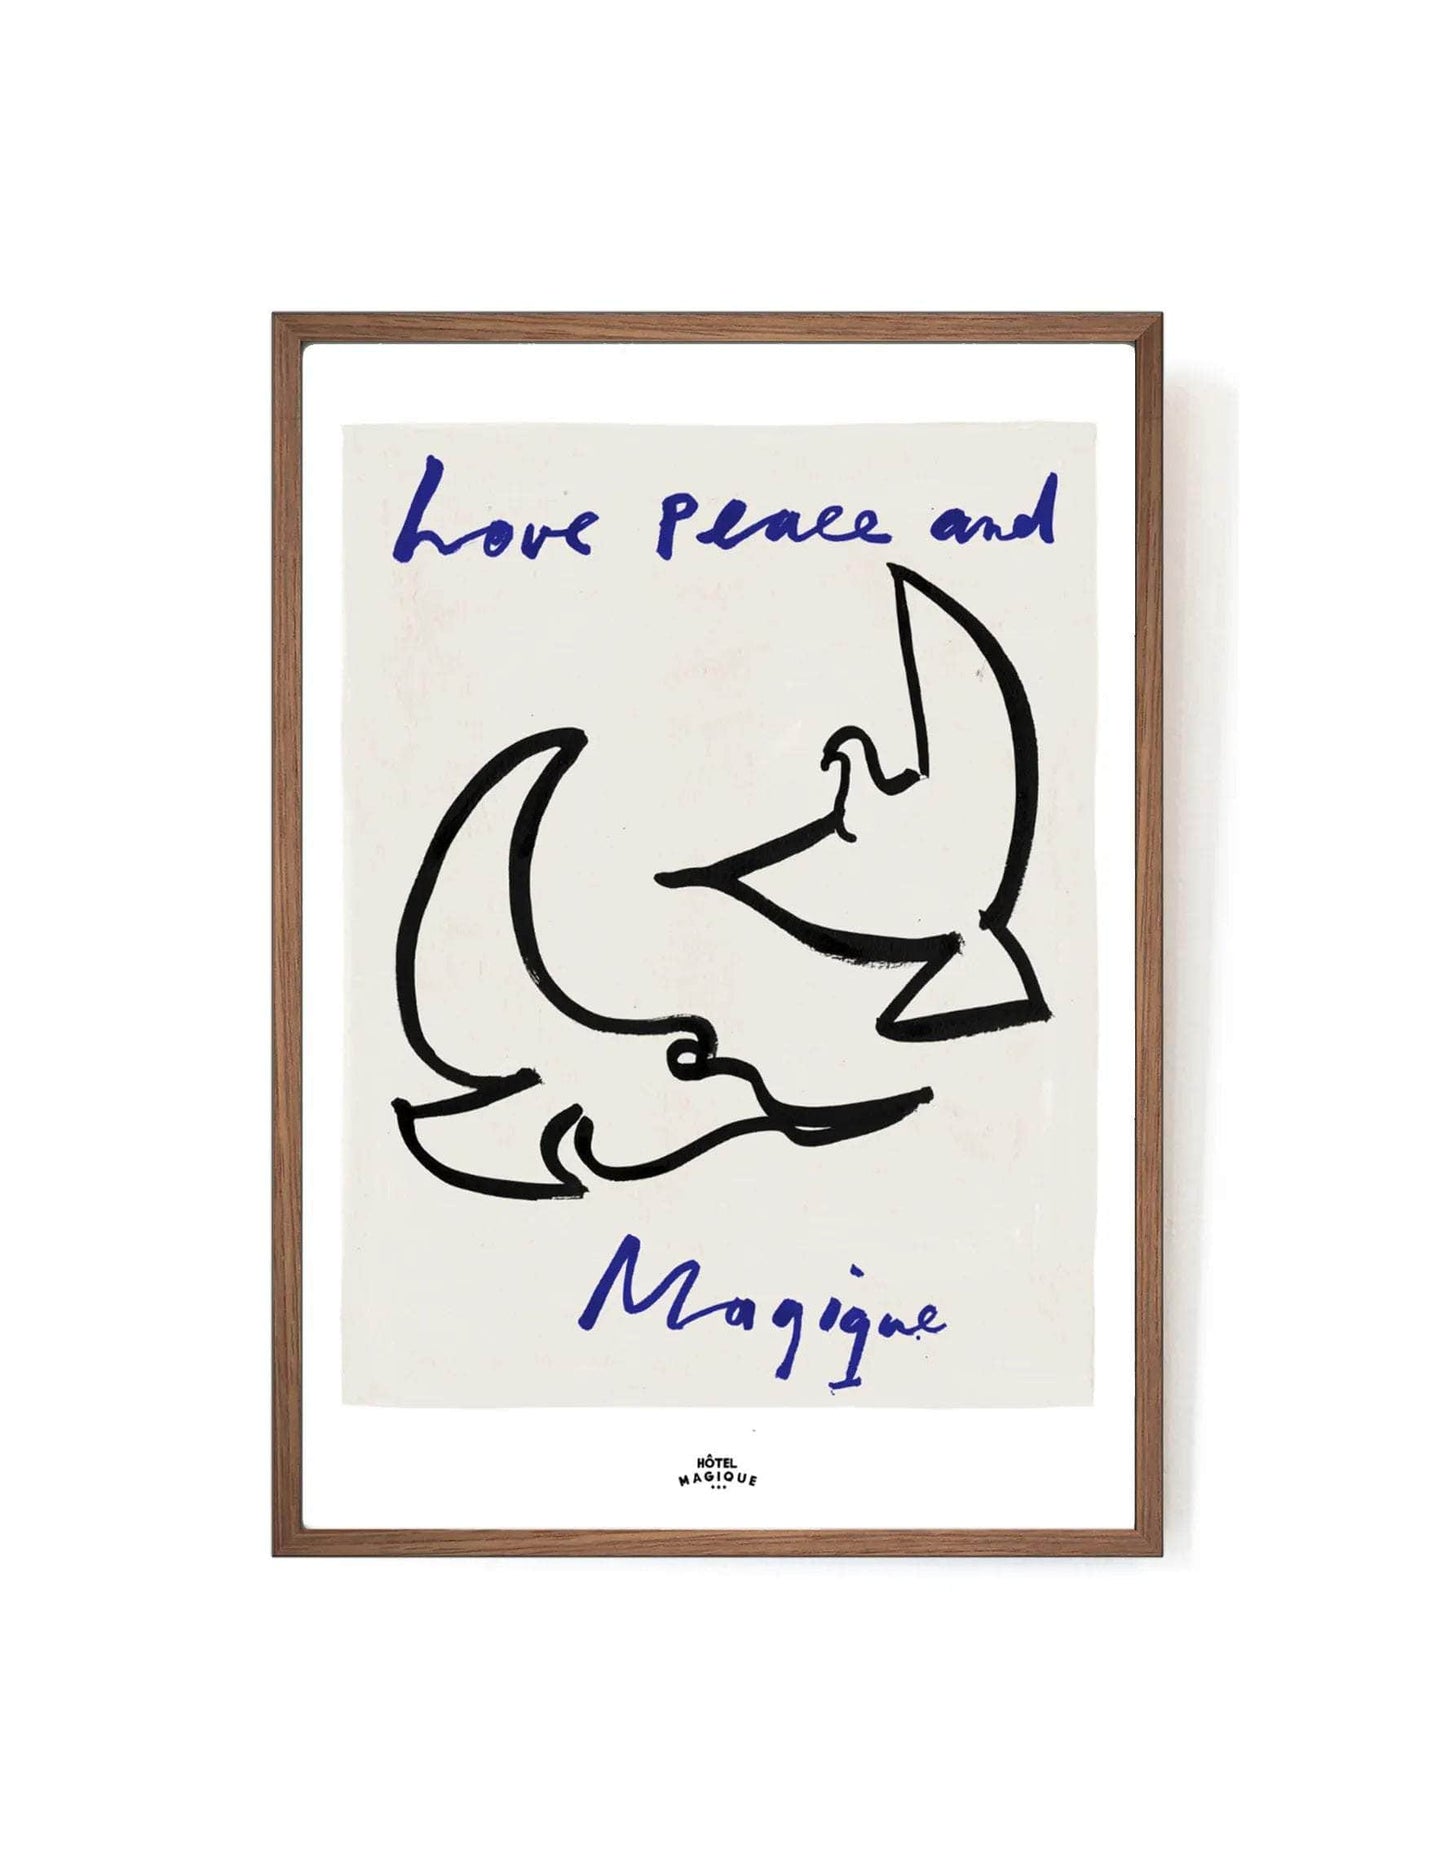 Love Peace and Magique Art Print